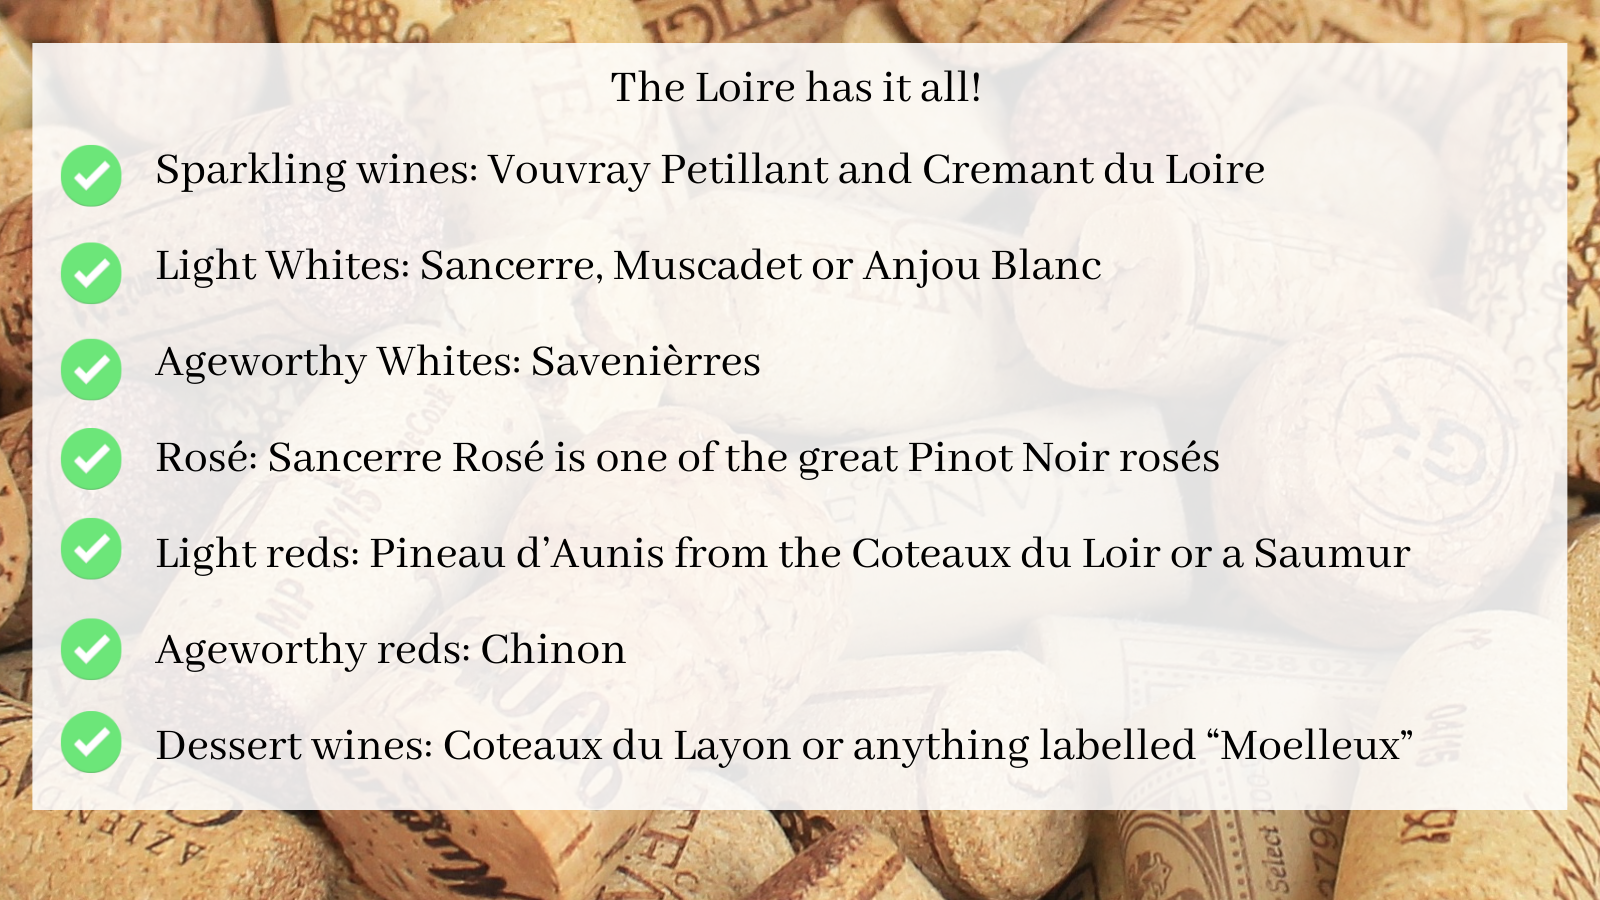 The Loire has it all!  If you want… Check out Sparkling wines: Vouvray Petillant and Cremant du Loire Light Whites: Sancerre, Muscadet or Anjou Blanc Ageworthy Whites: Savenièrres Rosé: Sancerre Rosé is one of the great Pinot Noir rosés Light reds: Pineau d’Aunis from the Coteaux du Loir or a Saumur Ageworthy reds: Chinon Dessert wines: Coteaux du Layon or anything labelled “Moelleux”